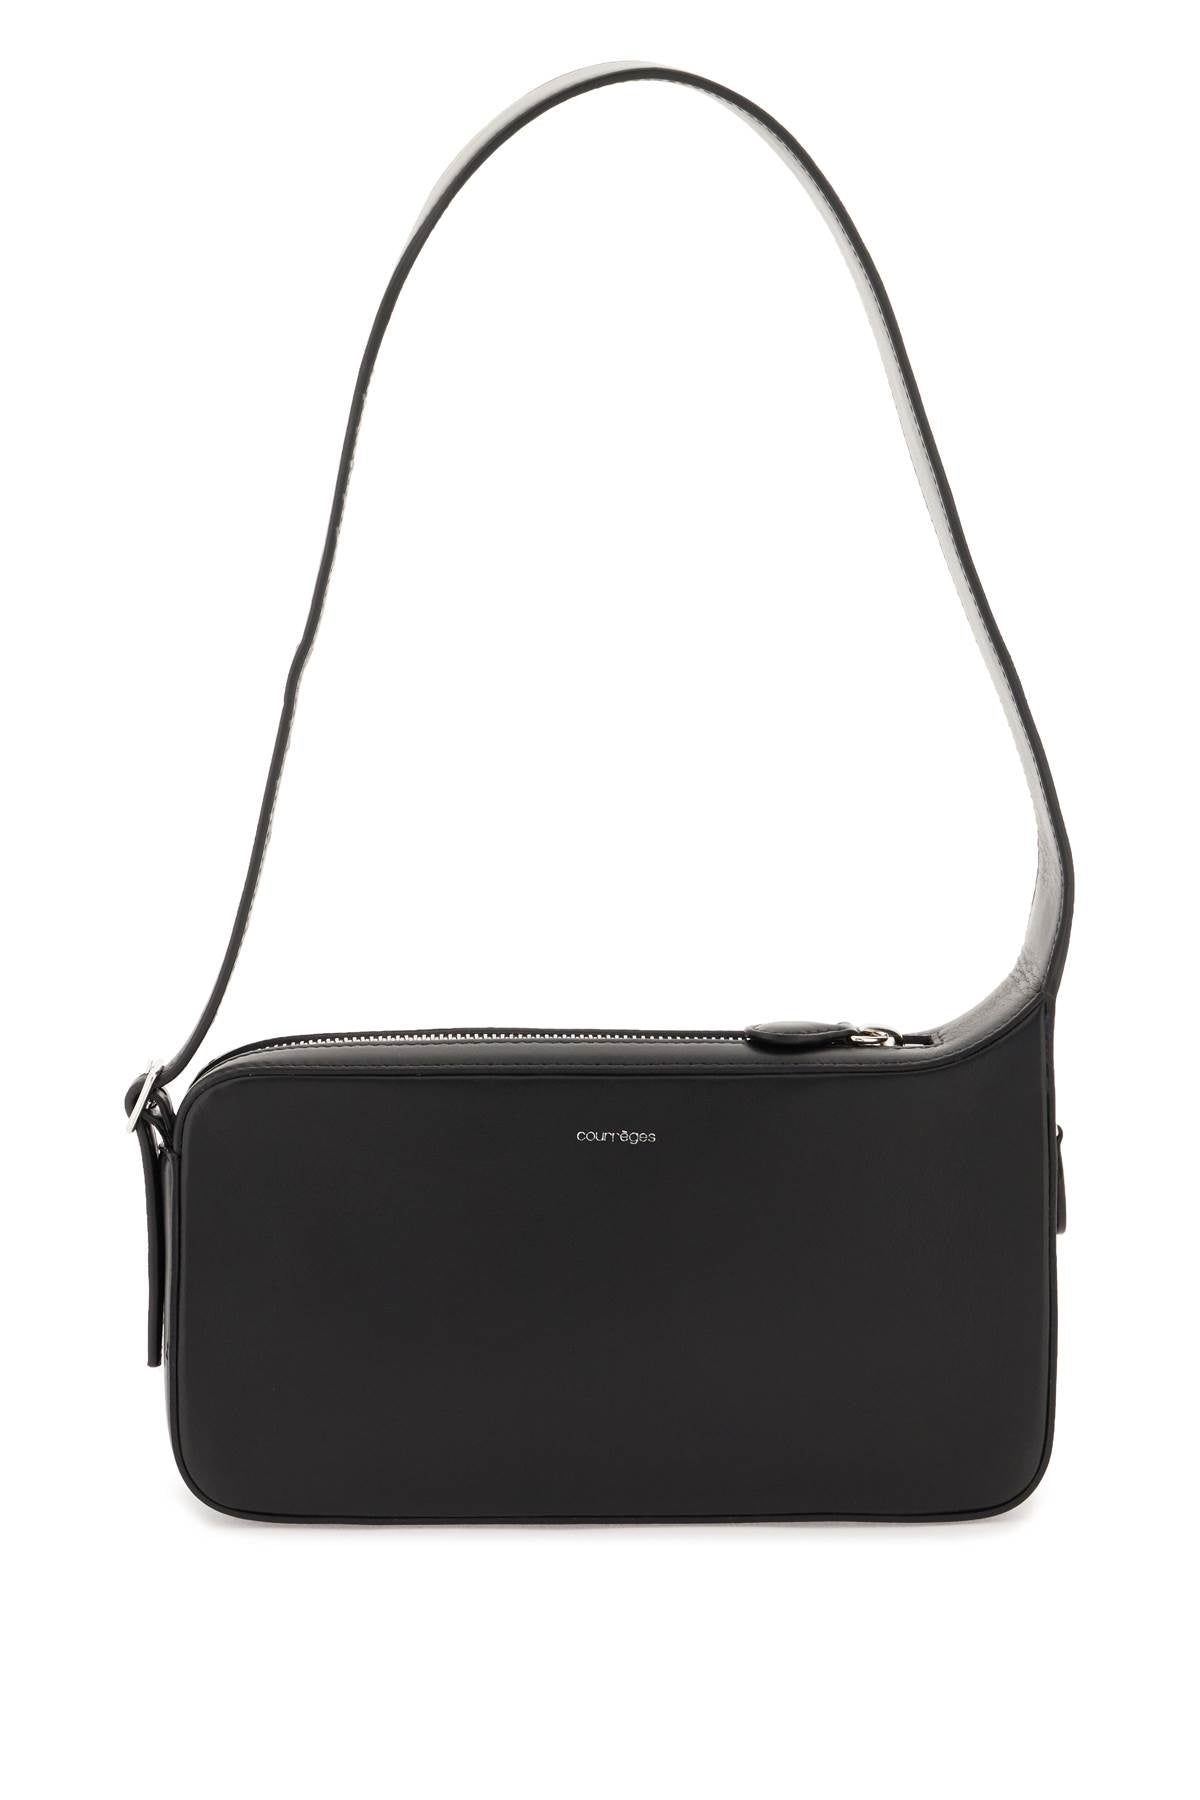 COURREGÈS Sleek and Sophisticated Black Leather Crossbody Handbag